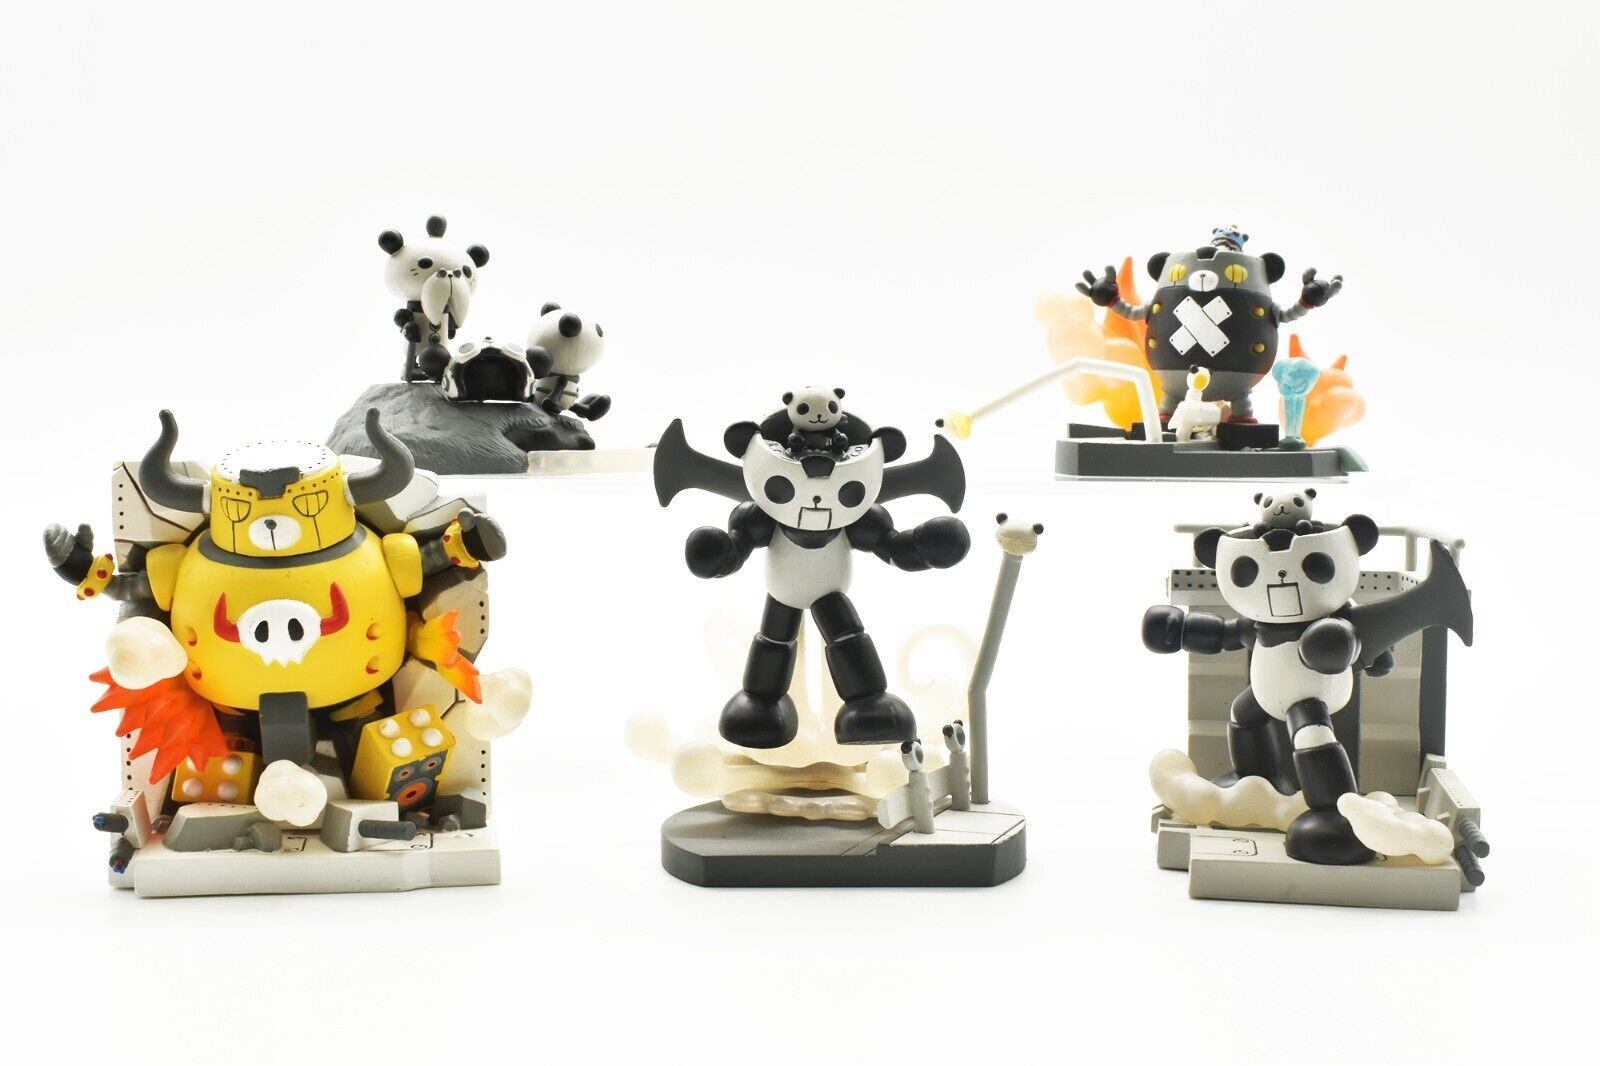 Panda Z Robonimal Mini Figures 5 pieces in Color and Monochrome US Seller